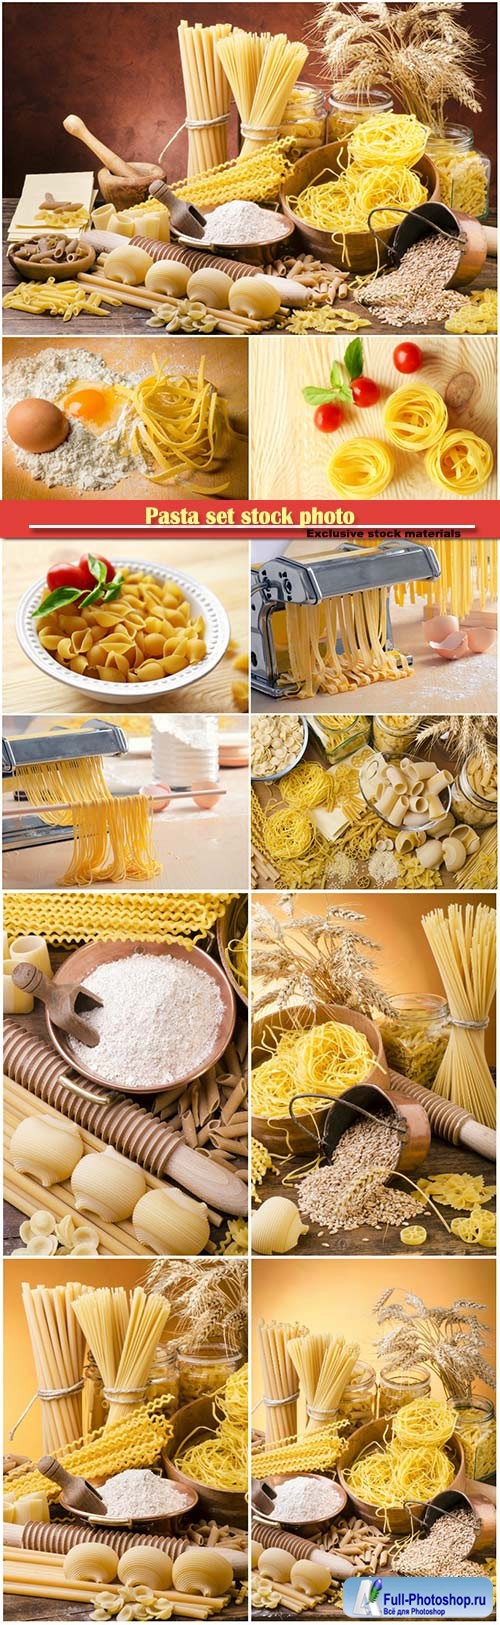 Pasta set stock photo